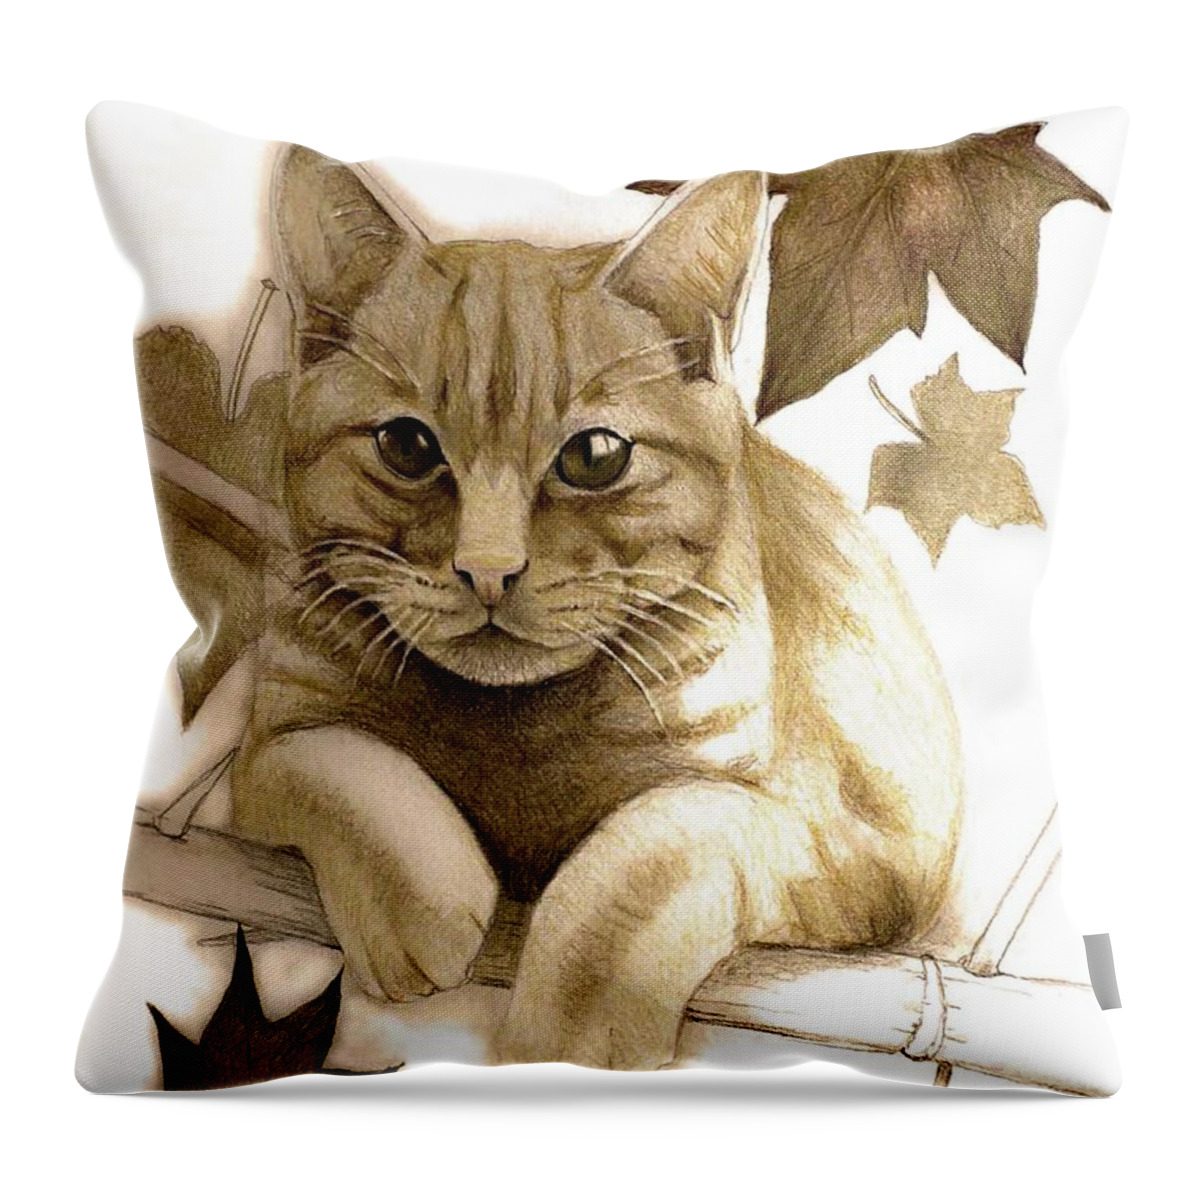 Cat Throw Pillow featuring the digital art Digitally Enhanced Cat Image by Tim Ernst